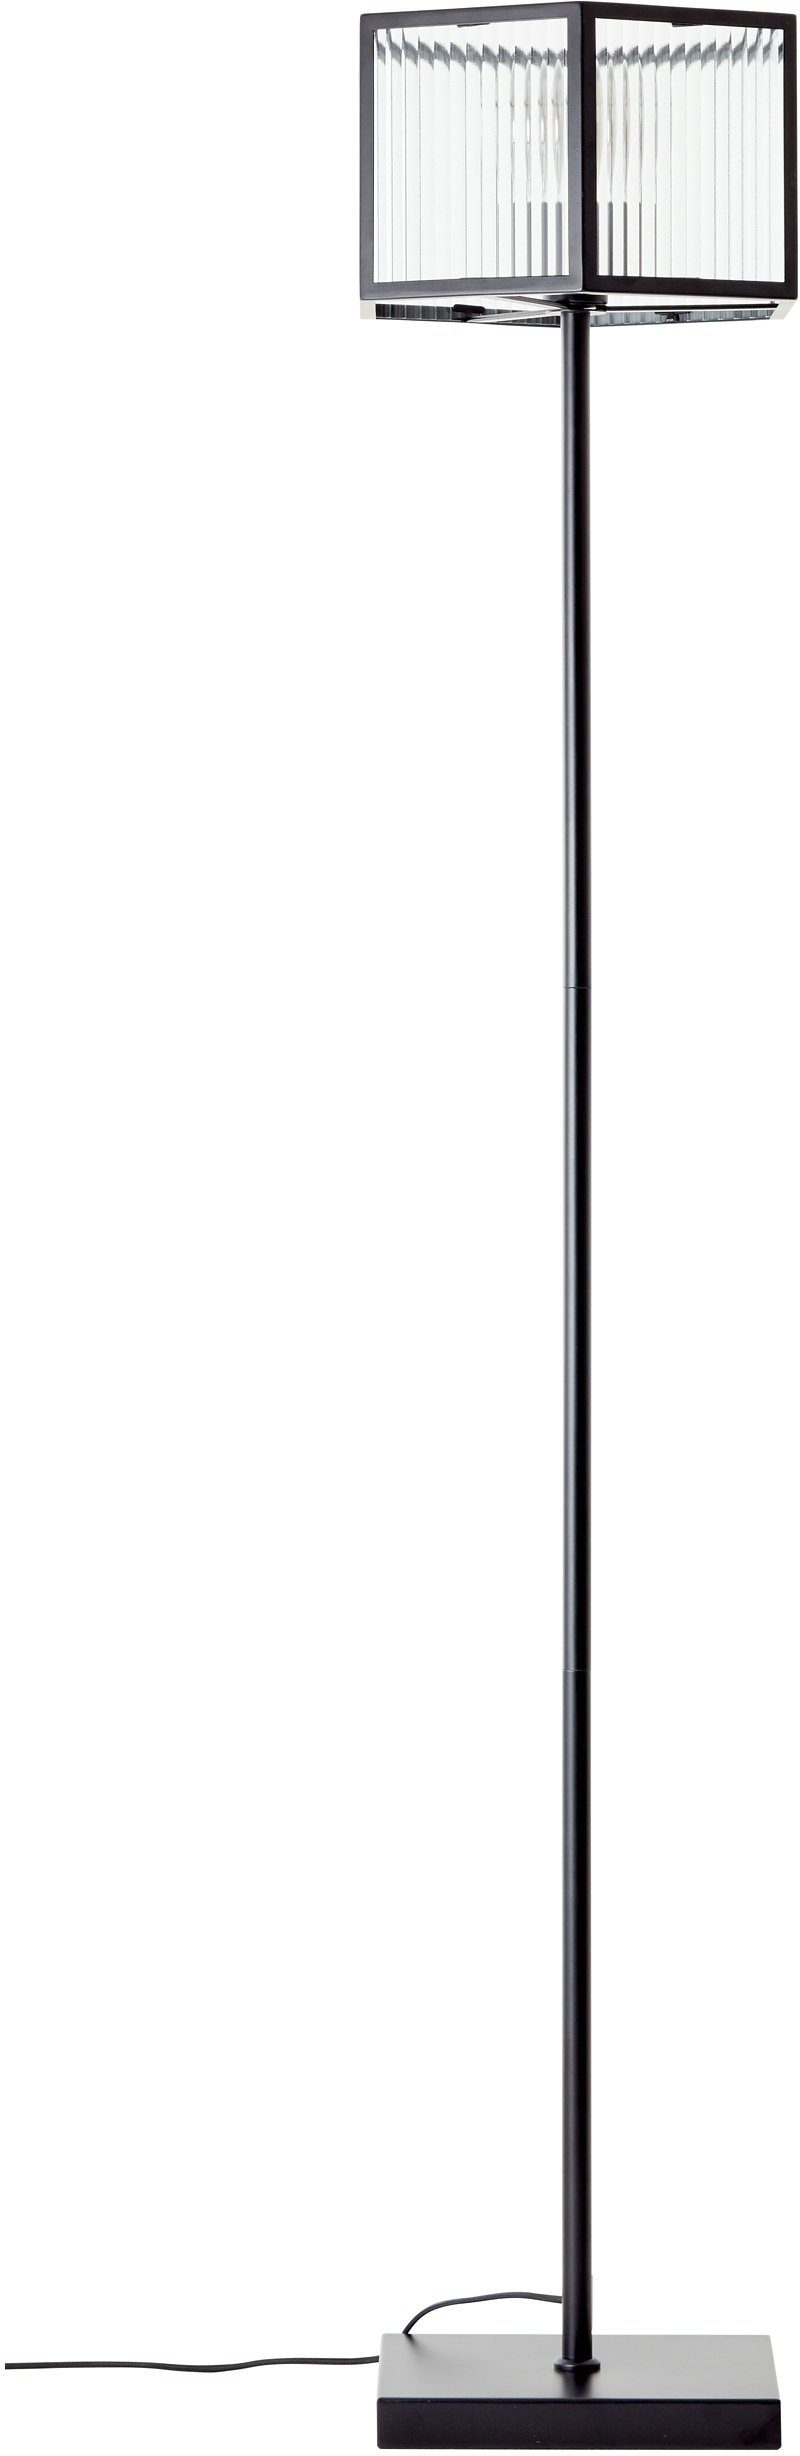 Timbers Stehlampe »Chesapeake«, 1 x E27, max. 40W, H 150cm, schwarz matt, mit Riffelglas-HomeTrends